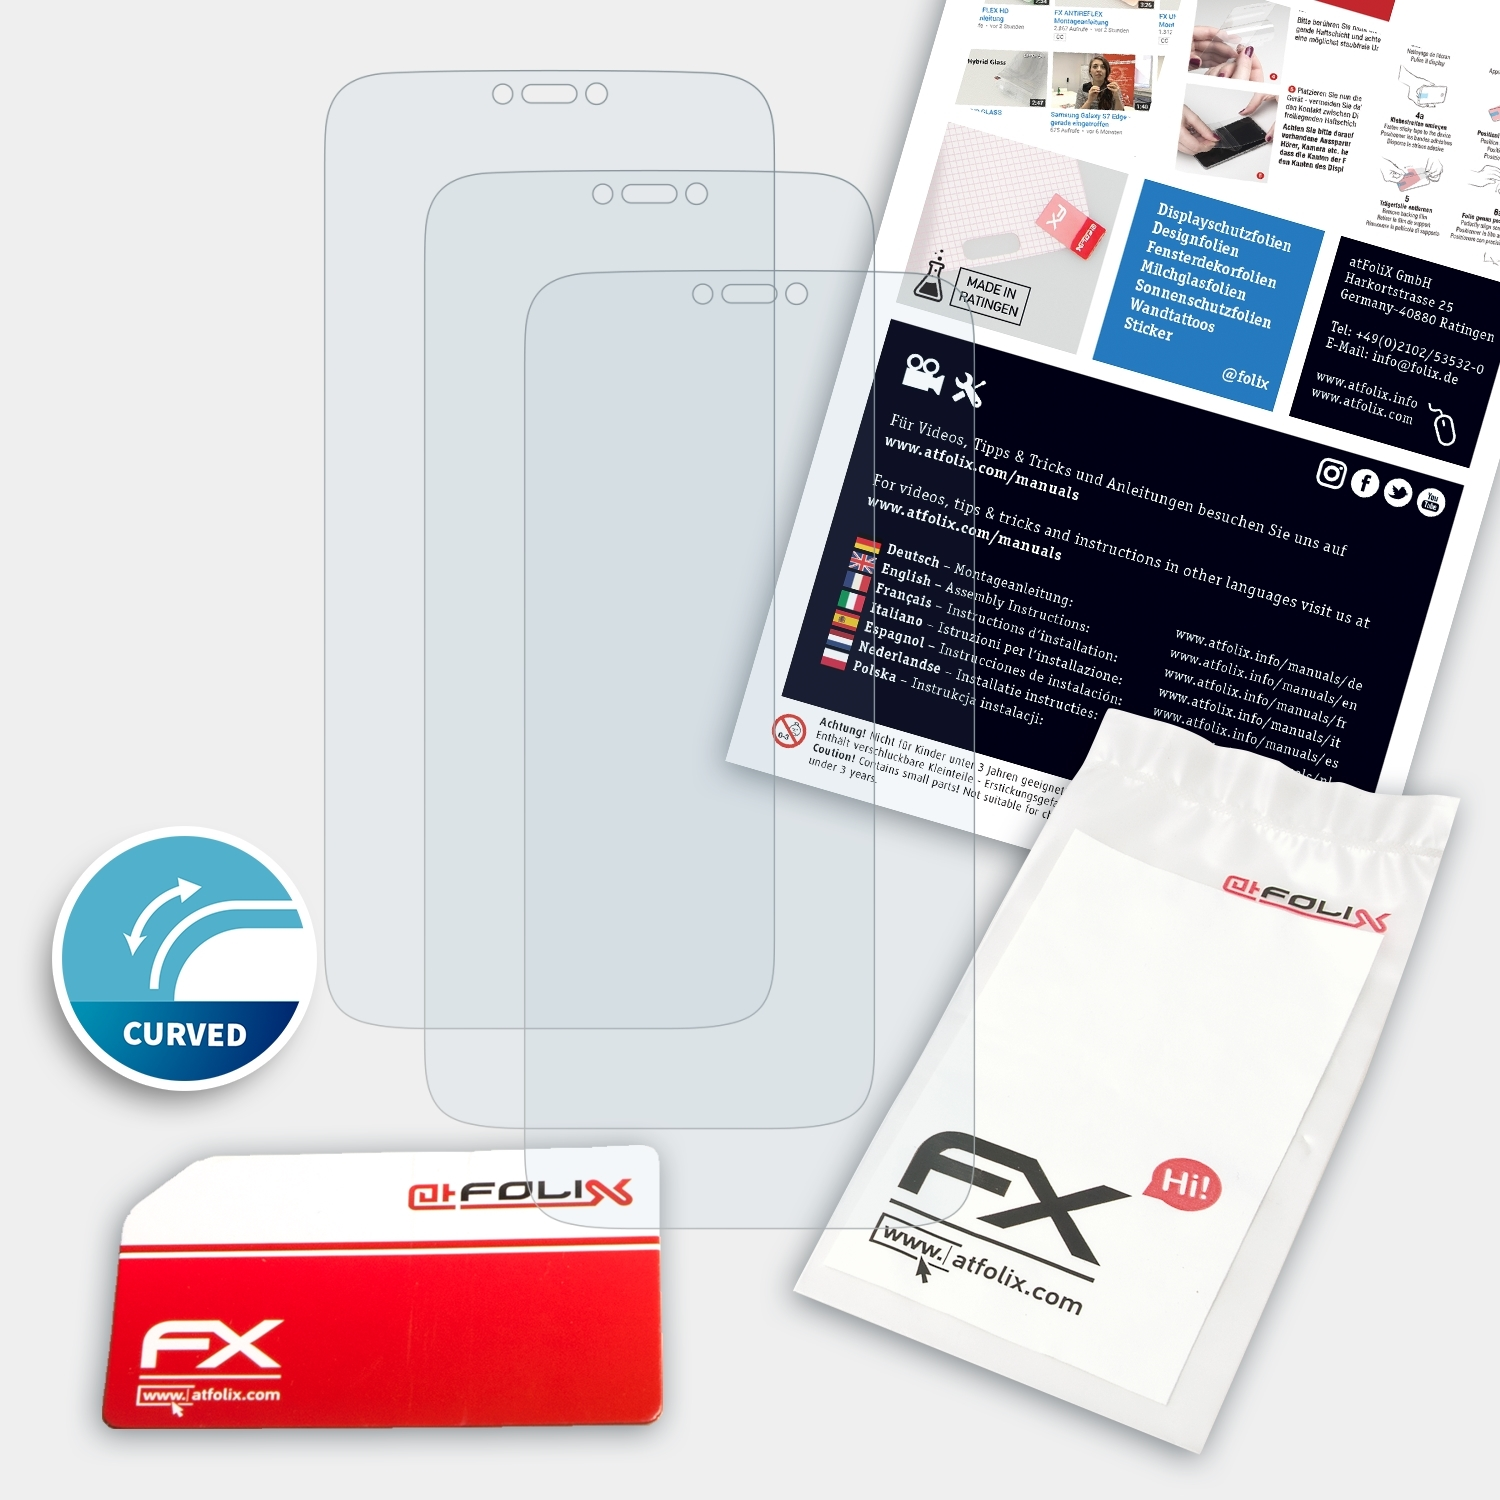 ATFOLIX 3x FX-ActiFleX Displayschutz(für Lenovo Moto Motorola Power) G7